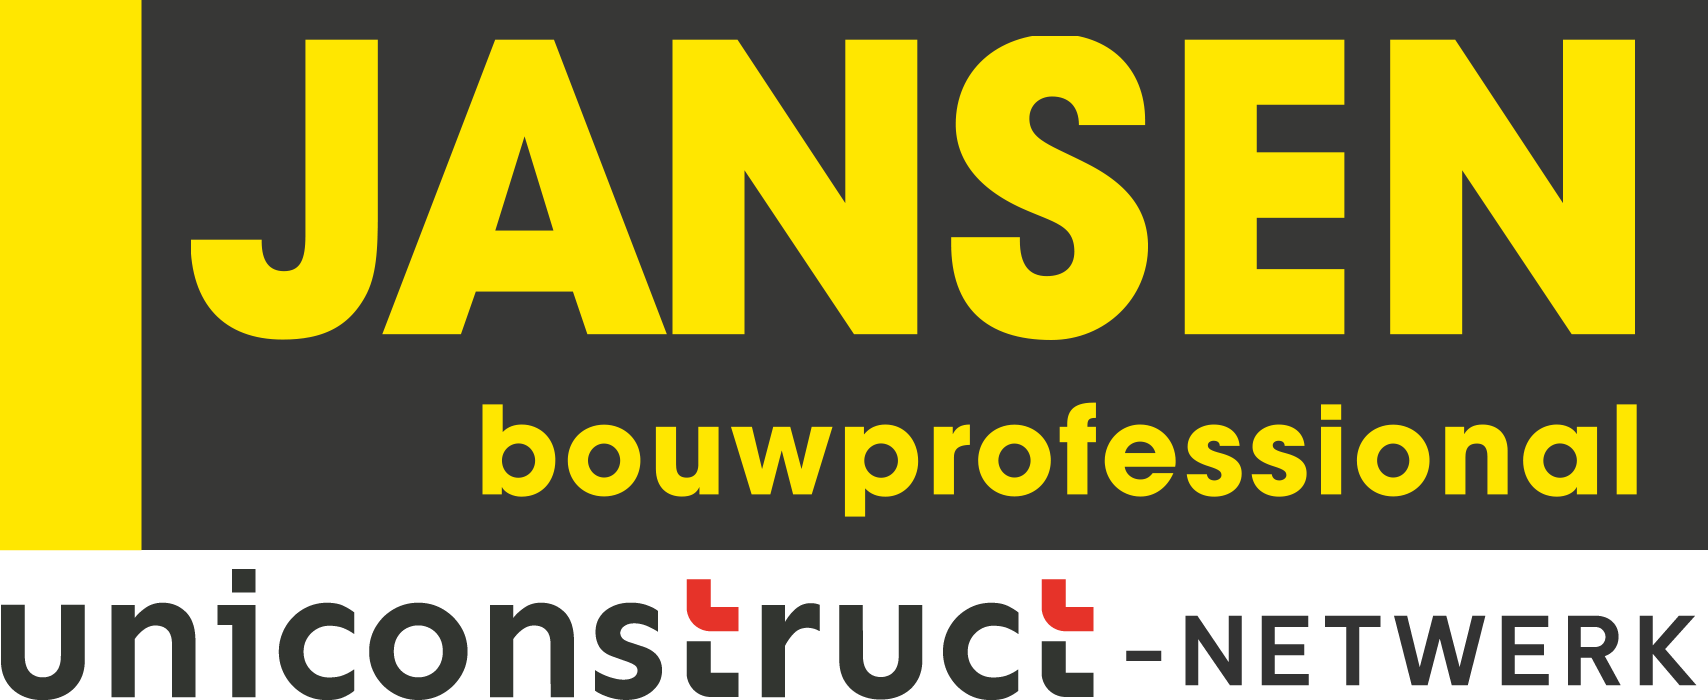 Jansen Bouwprofessional - Uniconstruct-netwerk